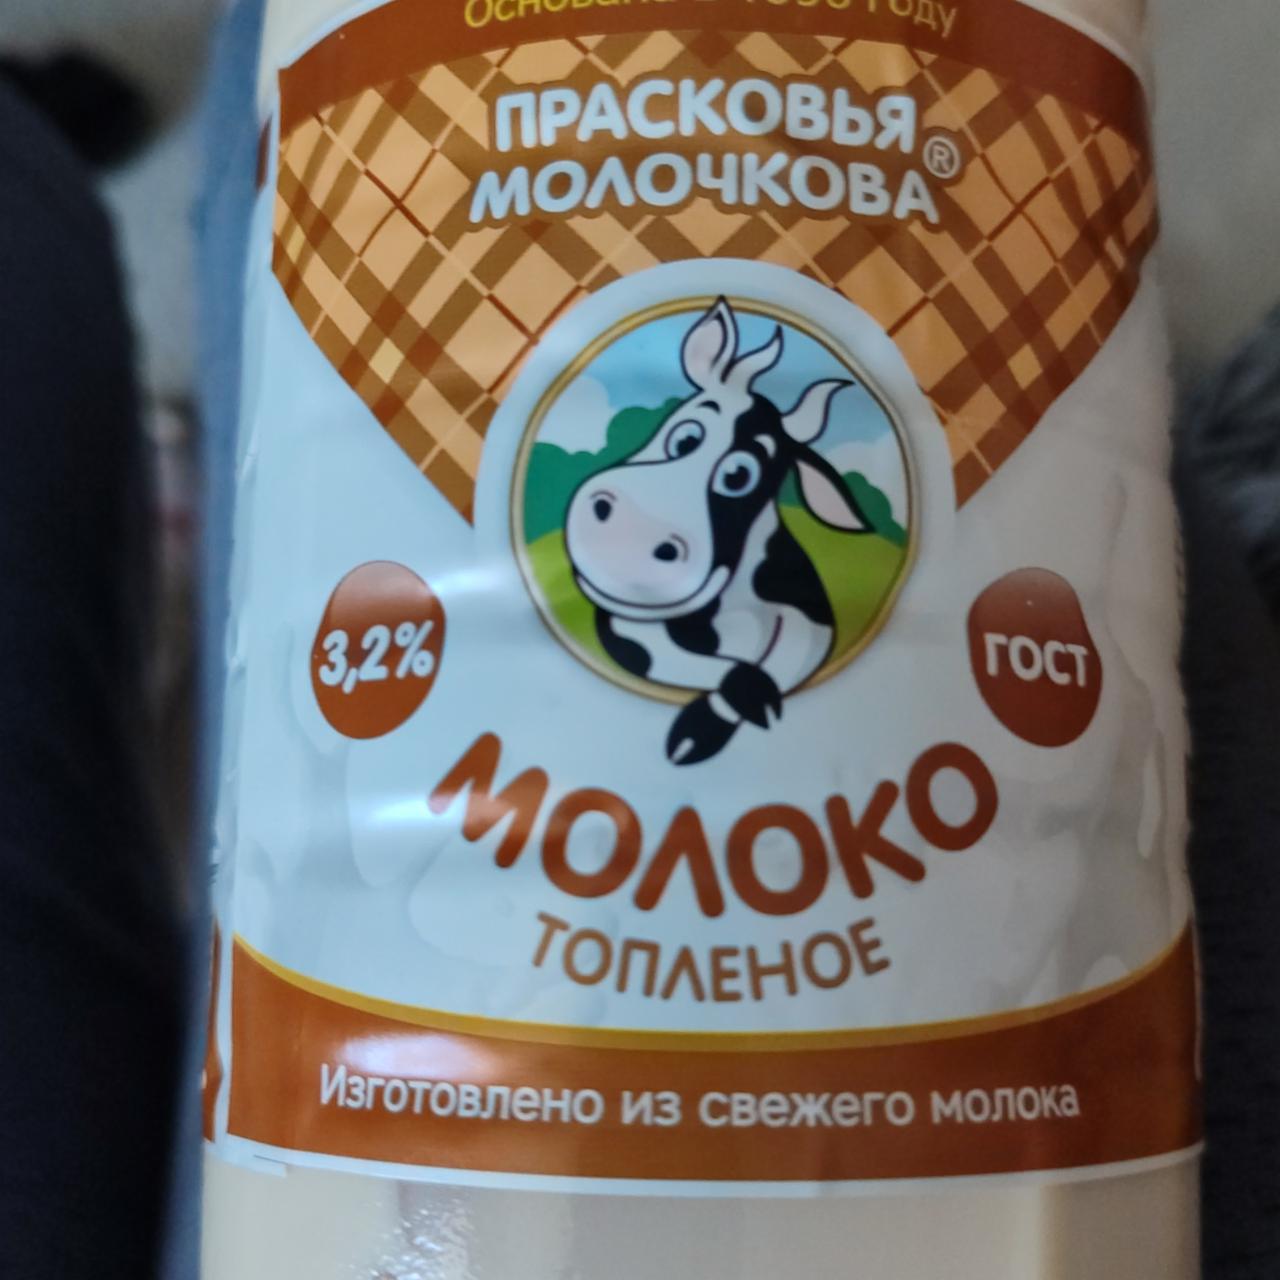 Фото - Молоко топлёное 3.2% Прасковья Молочкова